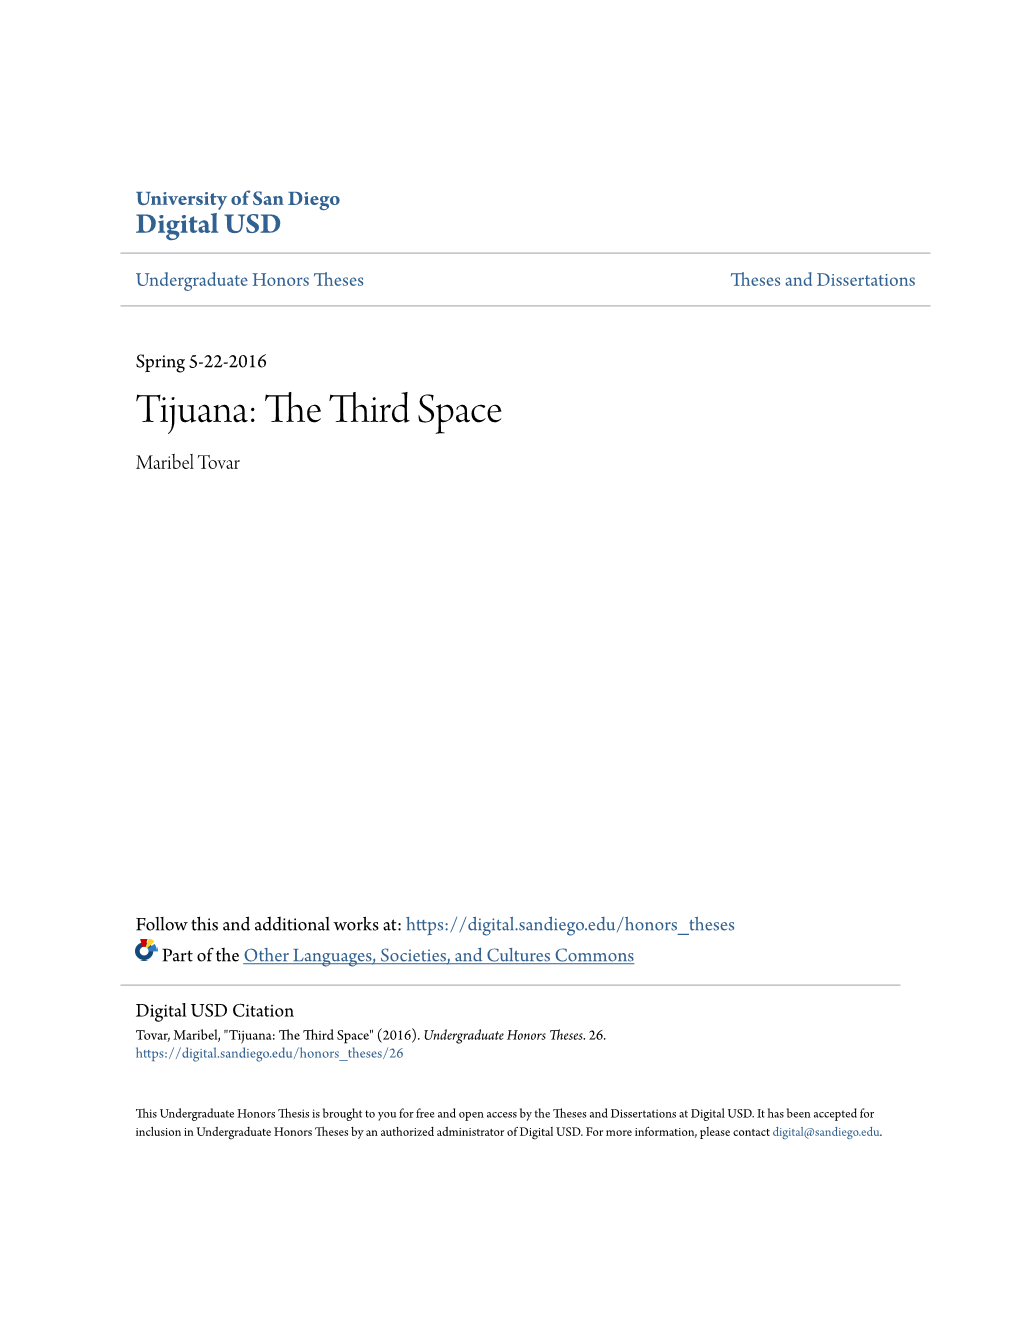 Tijuana: the Third Space Maribel Tovar